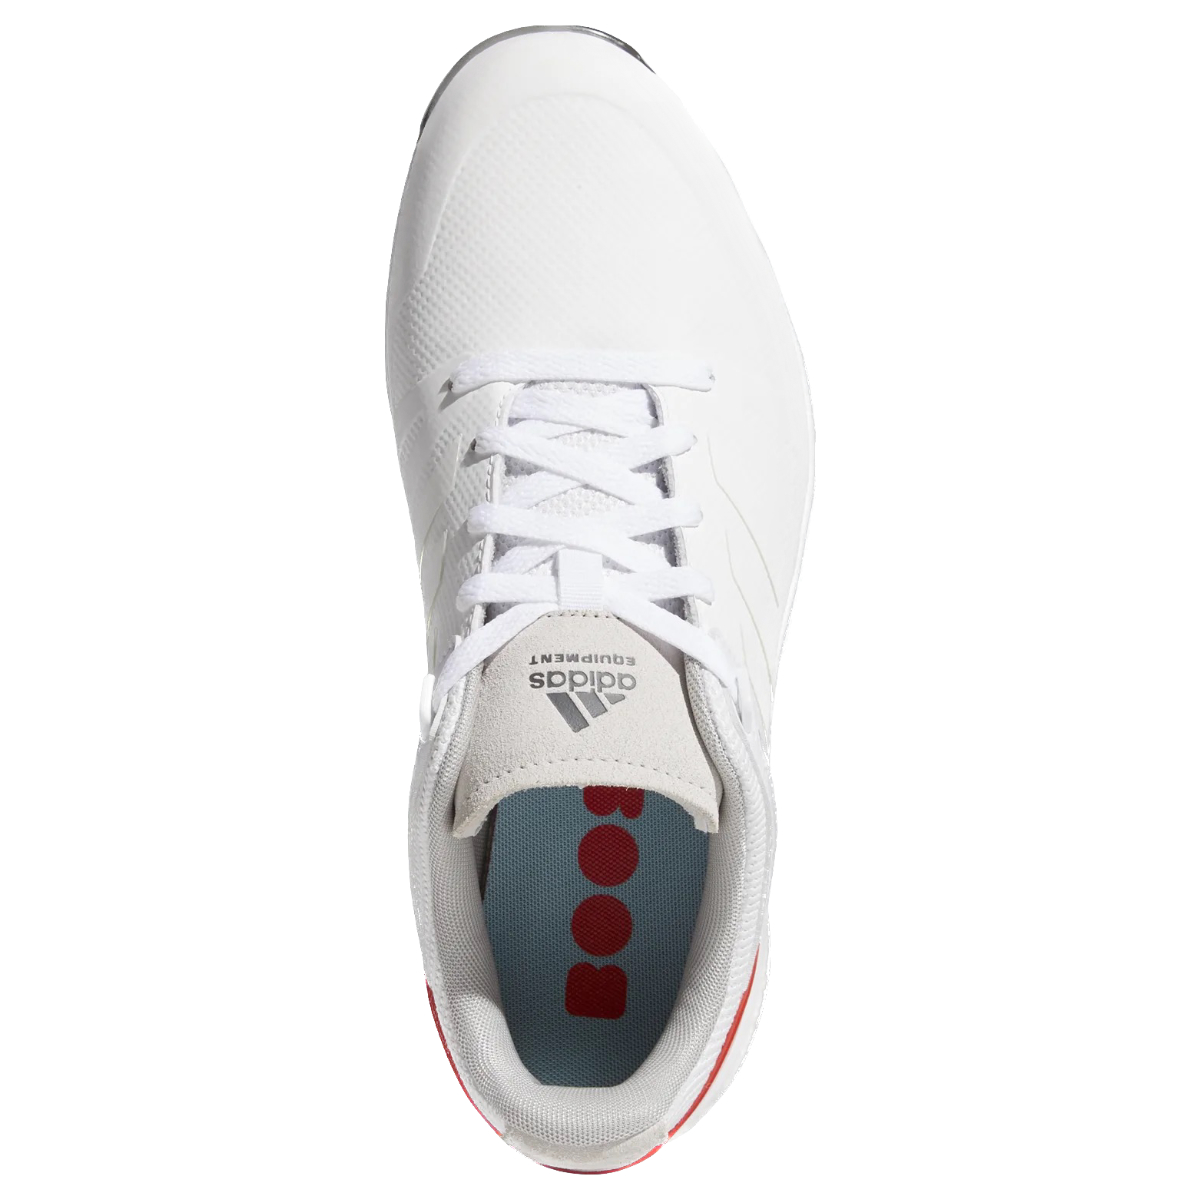 Adidas EQT White/Red Herren